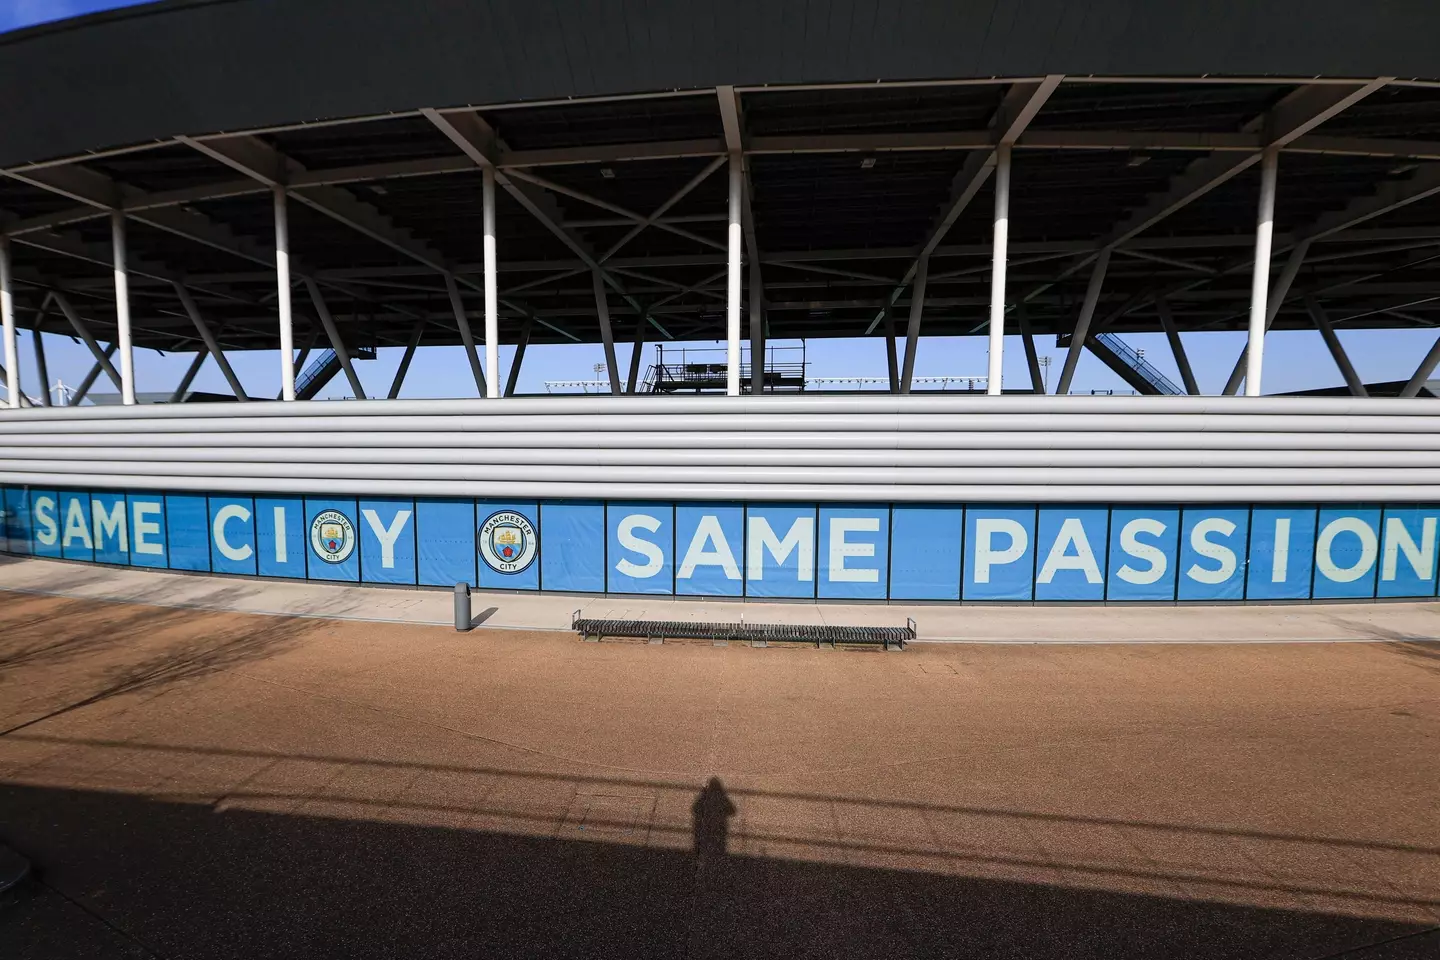 Manchester City's Academy stadium. News Images / Alamy